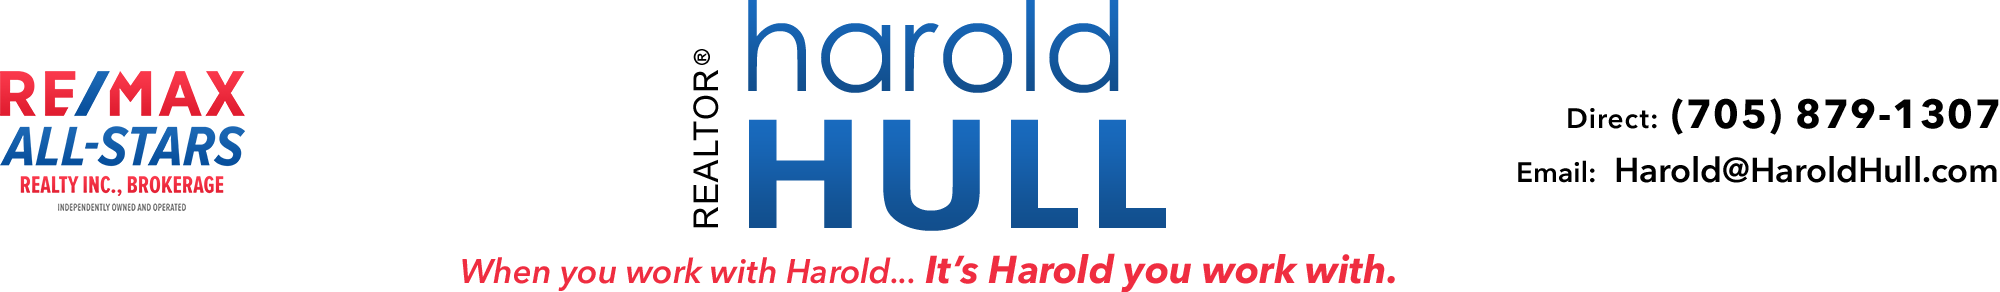 Harold Hull Graphic Header